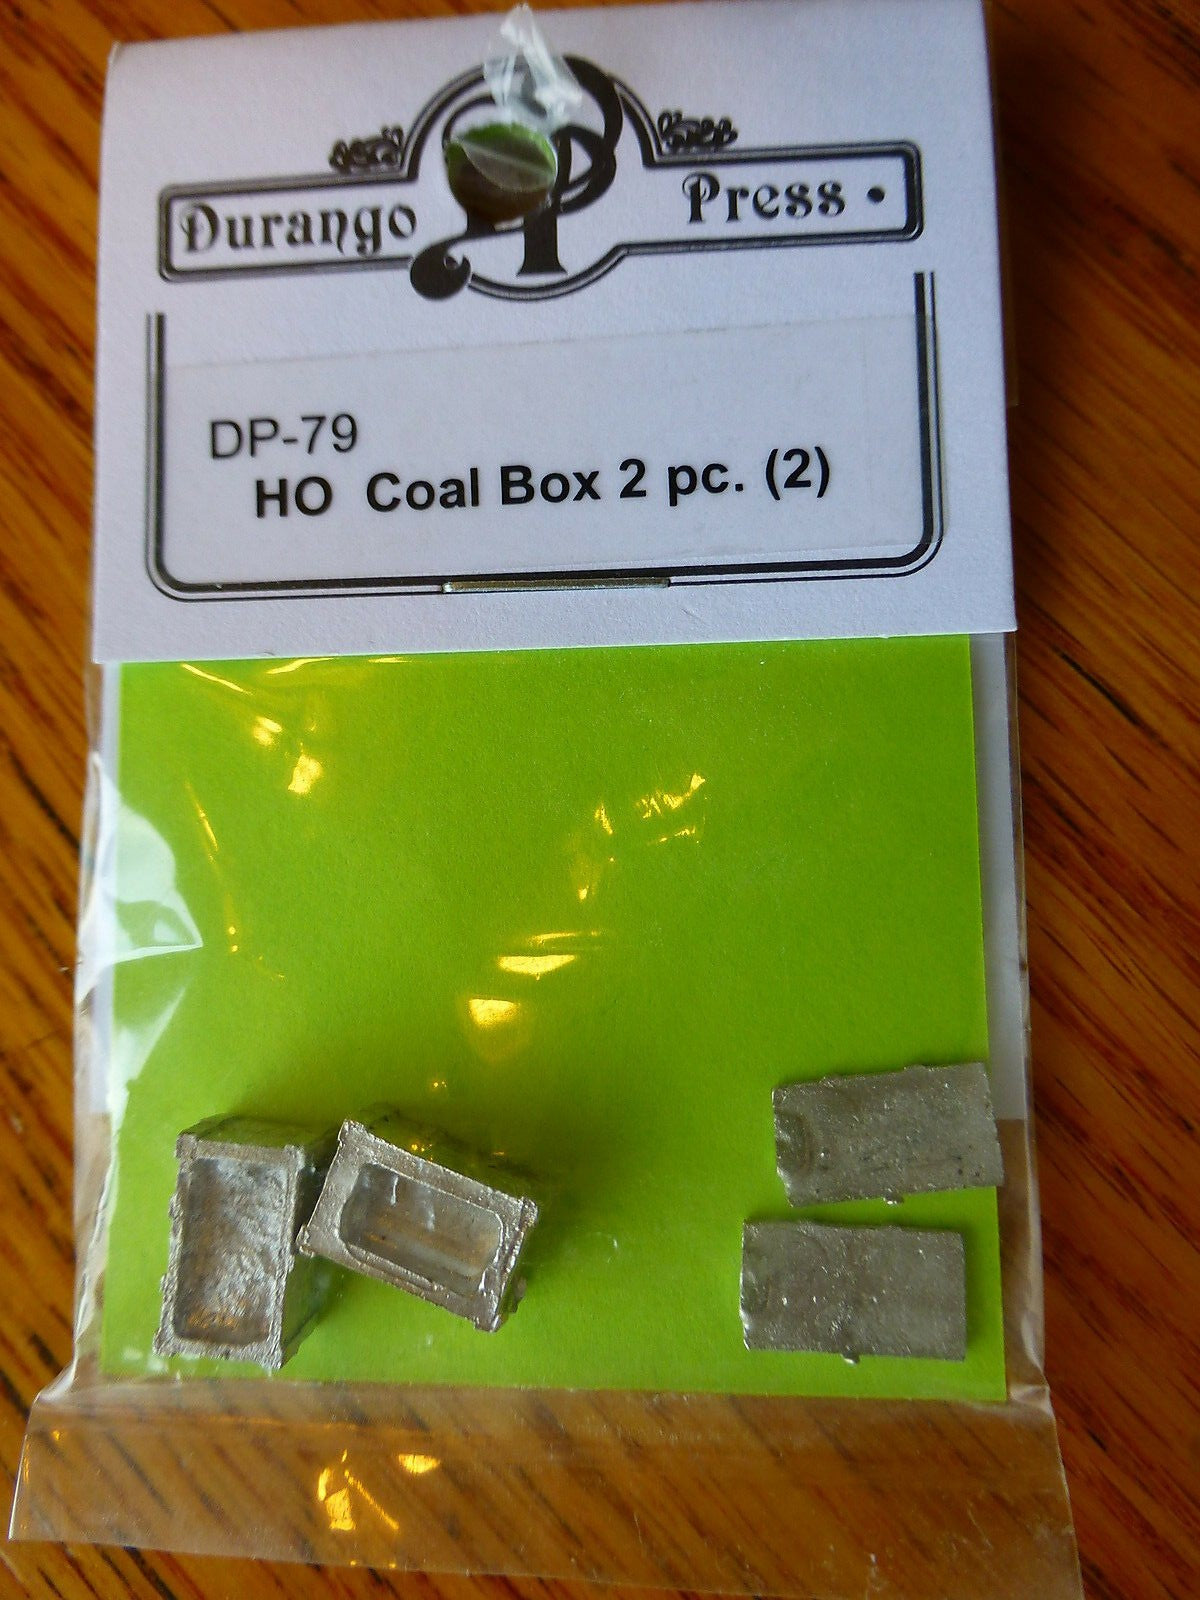 Durango Press 79 Ho Coal Box 2 Pc